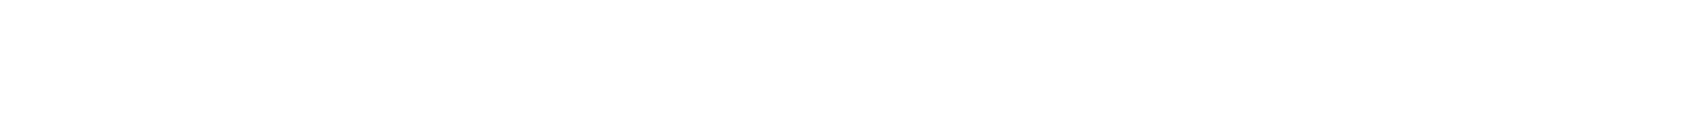 Immofinanz logo large for dark backgrounds (transparent PNG)